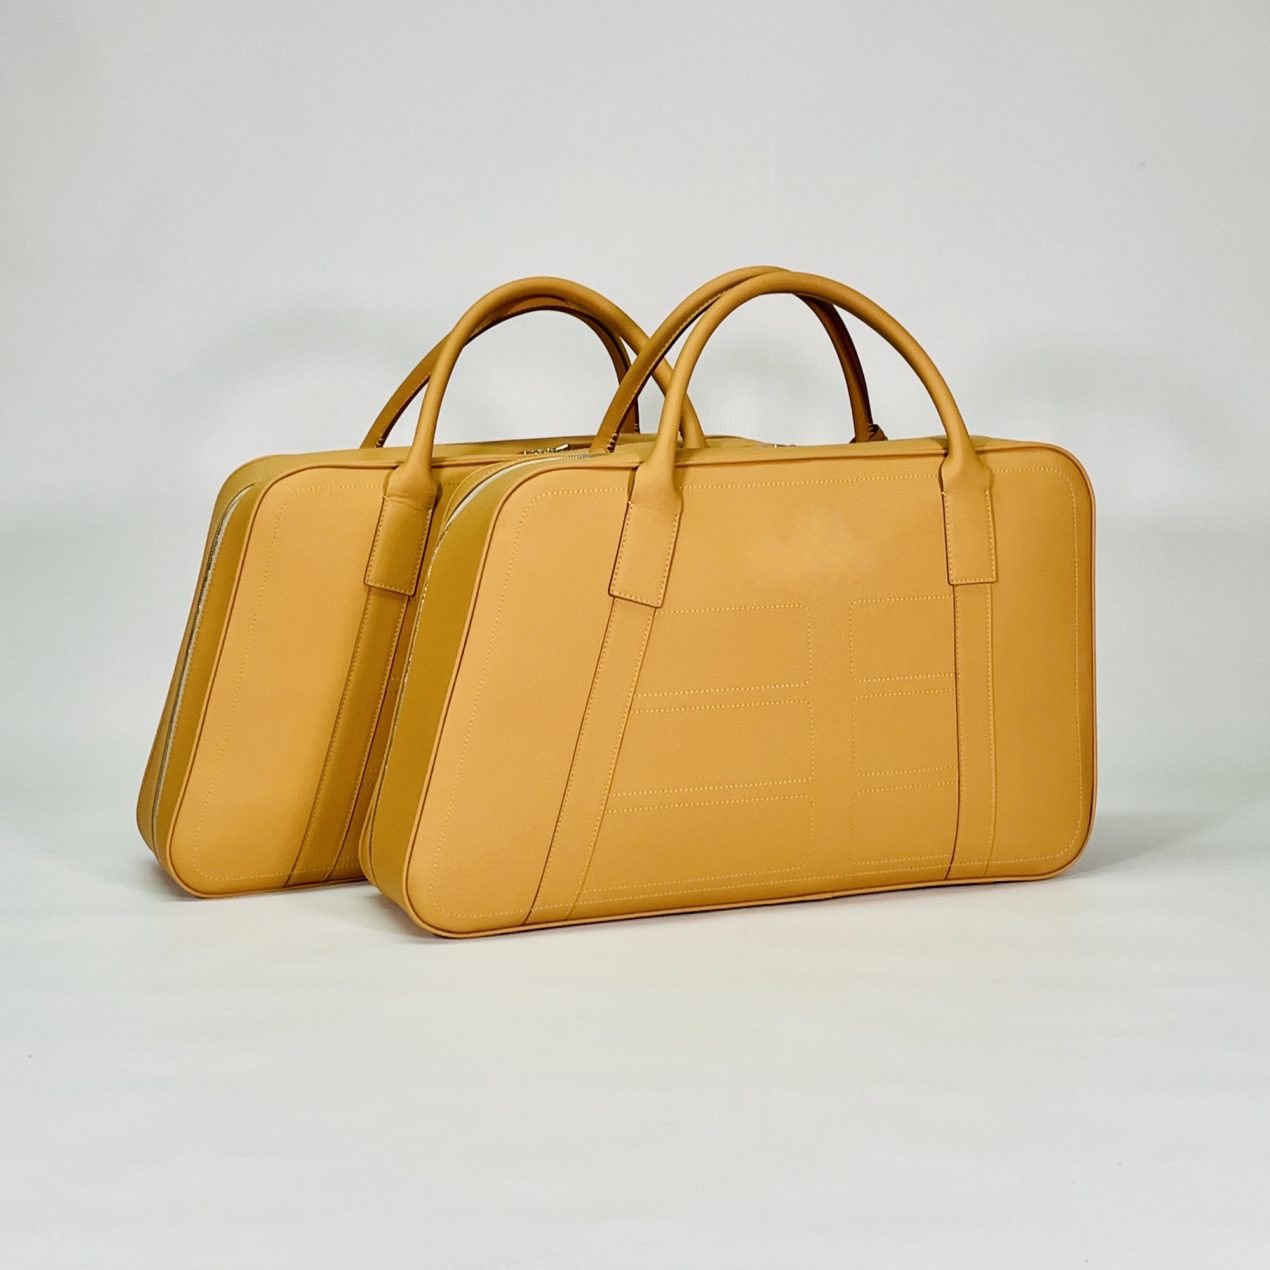 Asymmetrical suitcase measure bespoke luggage Leather Beige 4208 Beige + Alcantara Schedoni